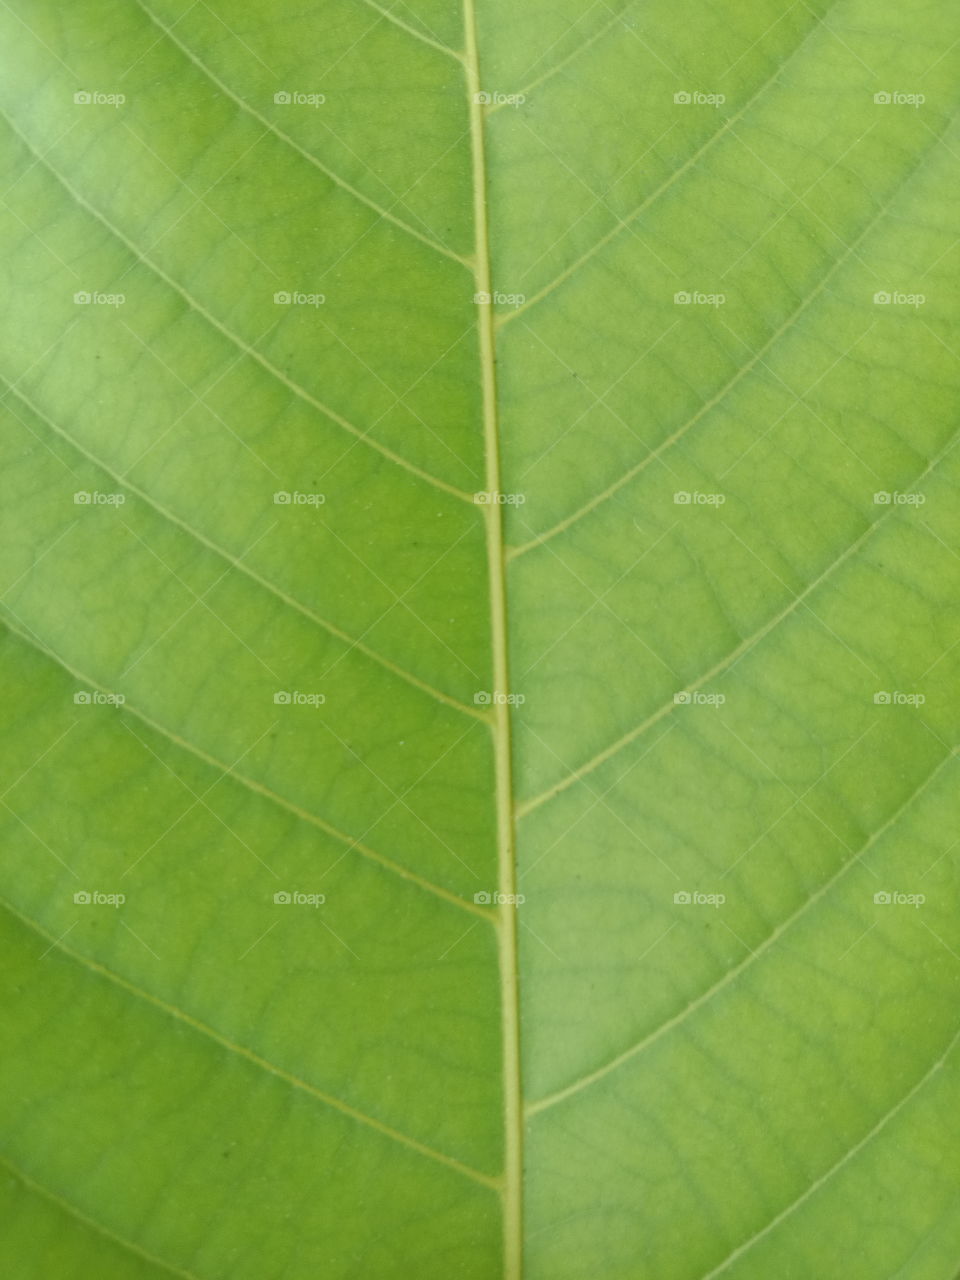 green leaf texture (teksture daun hijau)